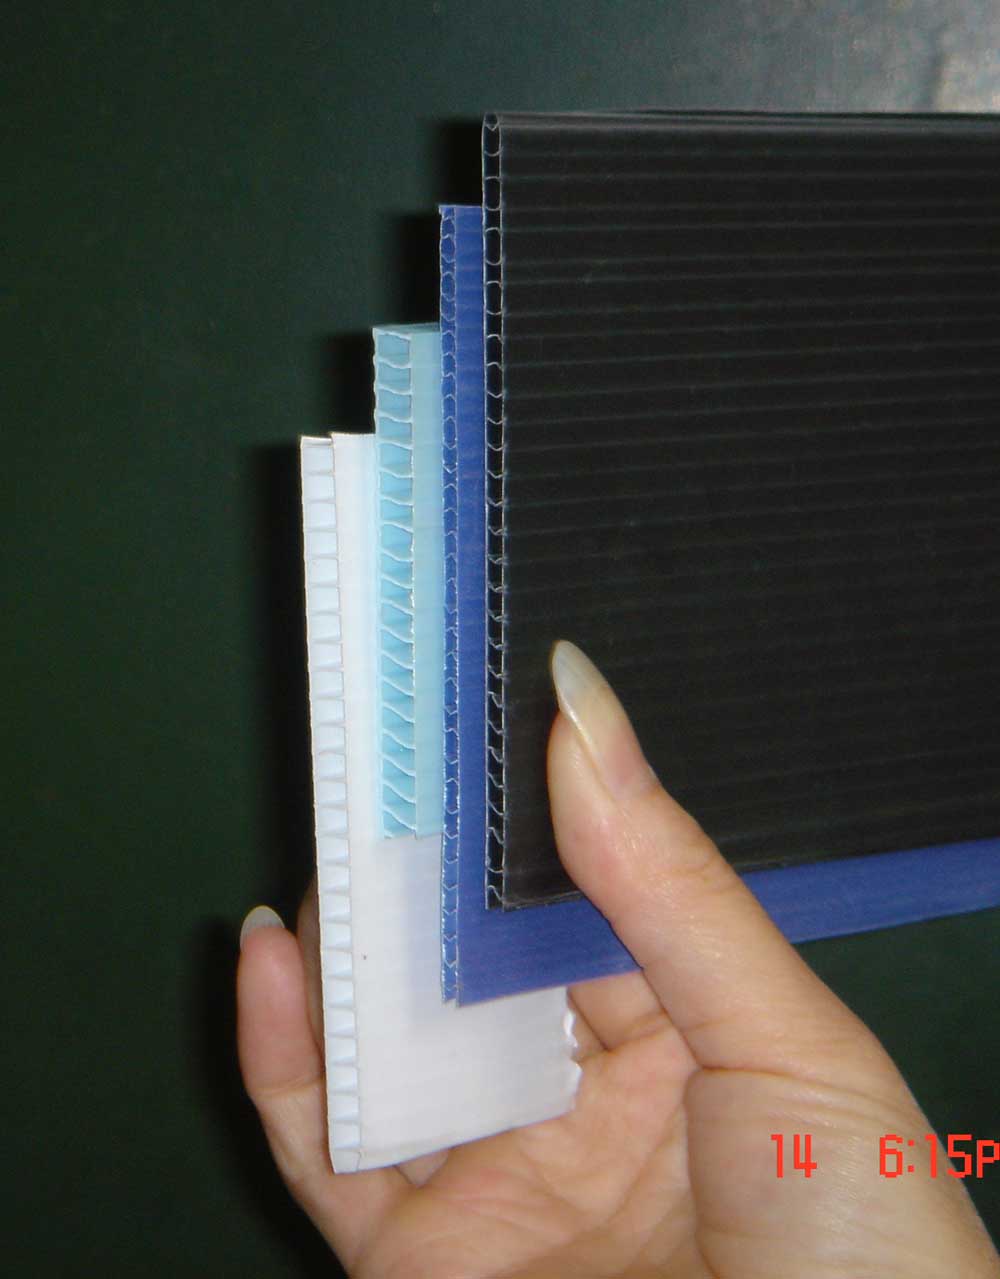  PP, PE Corrugated Sheets (PP, PE Feuilles de carton ondulé)